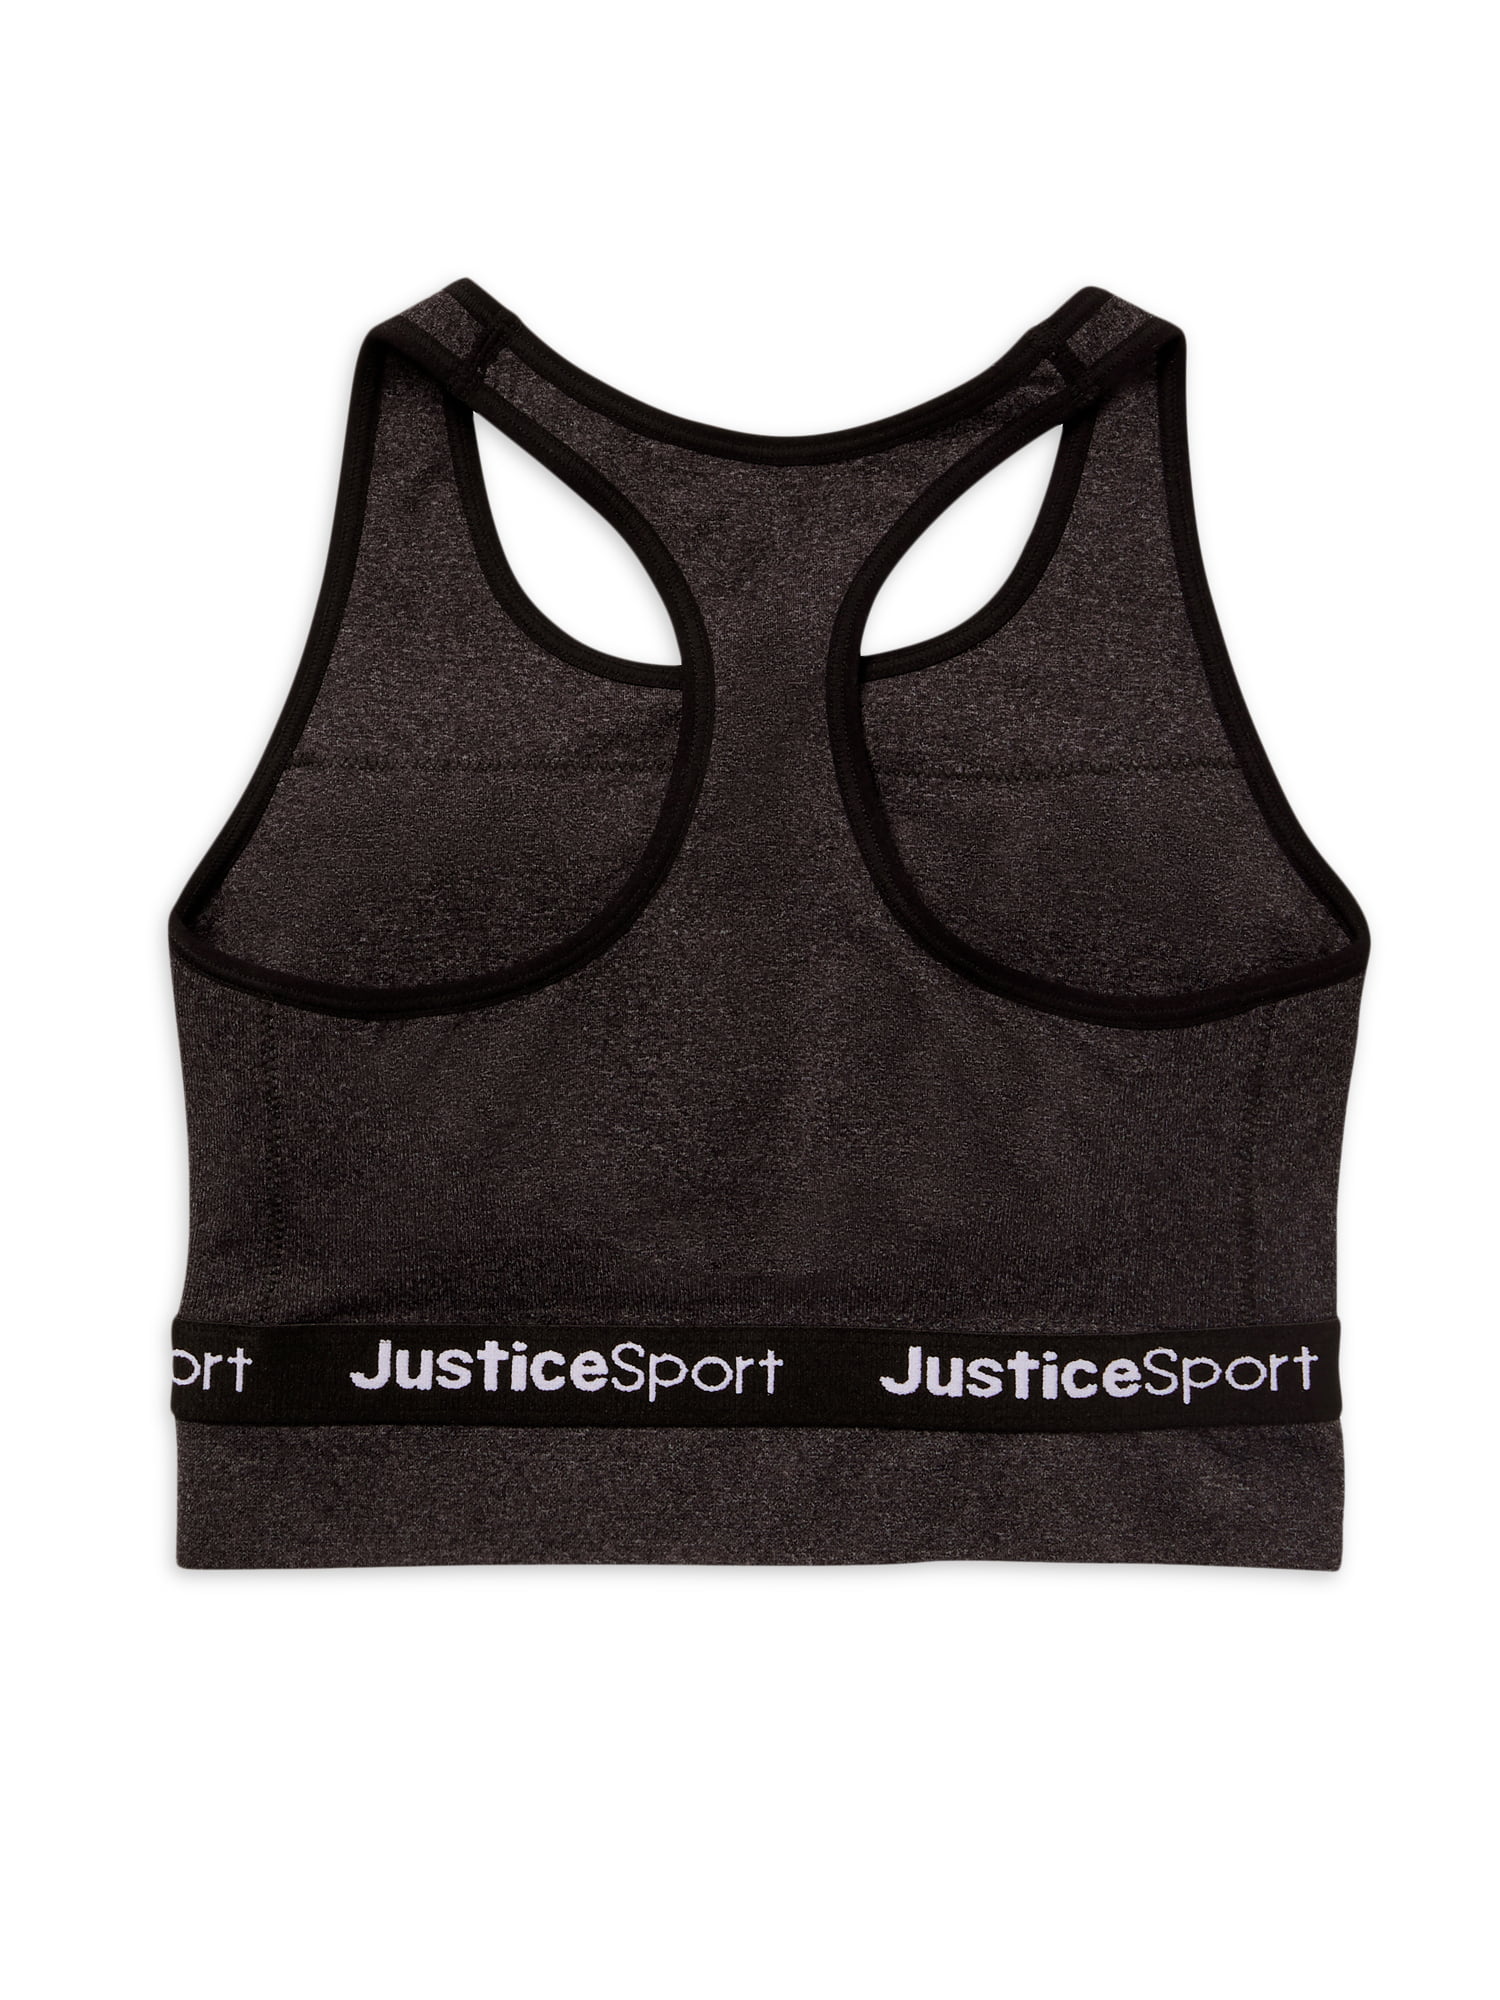 GIRLS JUSTICE SPORTS Bras 2 Pack Lot Size 28 NEW Soft Pink Racerback Bra  £12.19 - PicClick UK